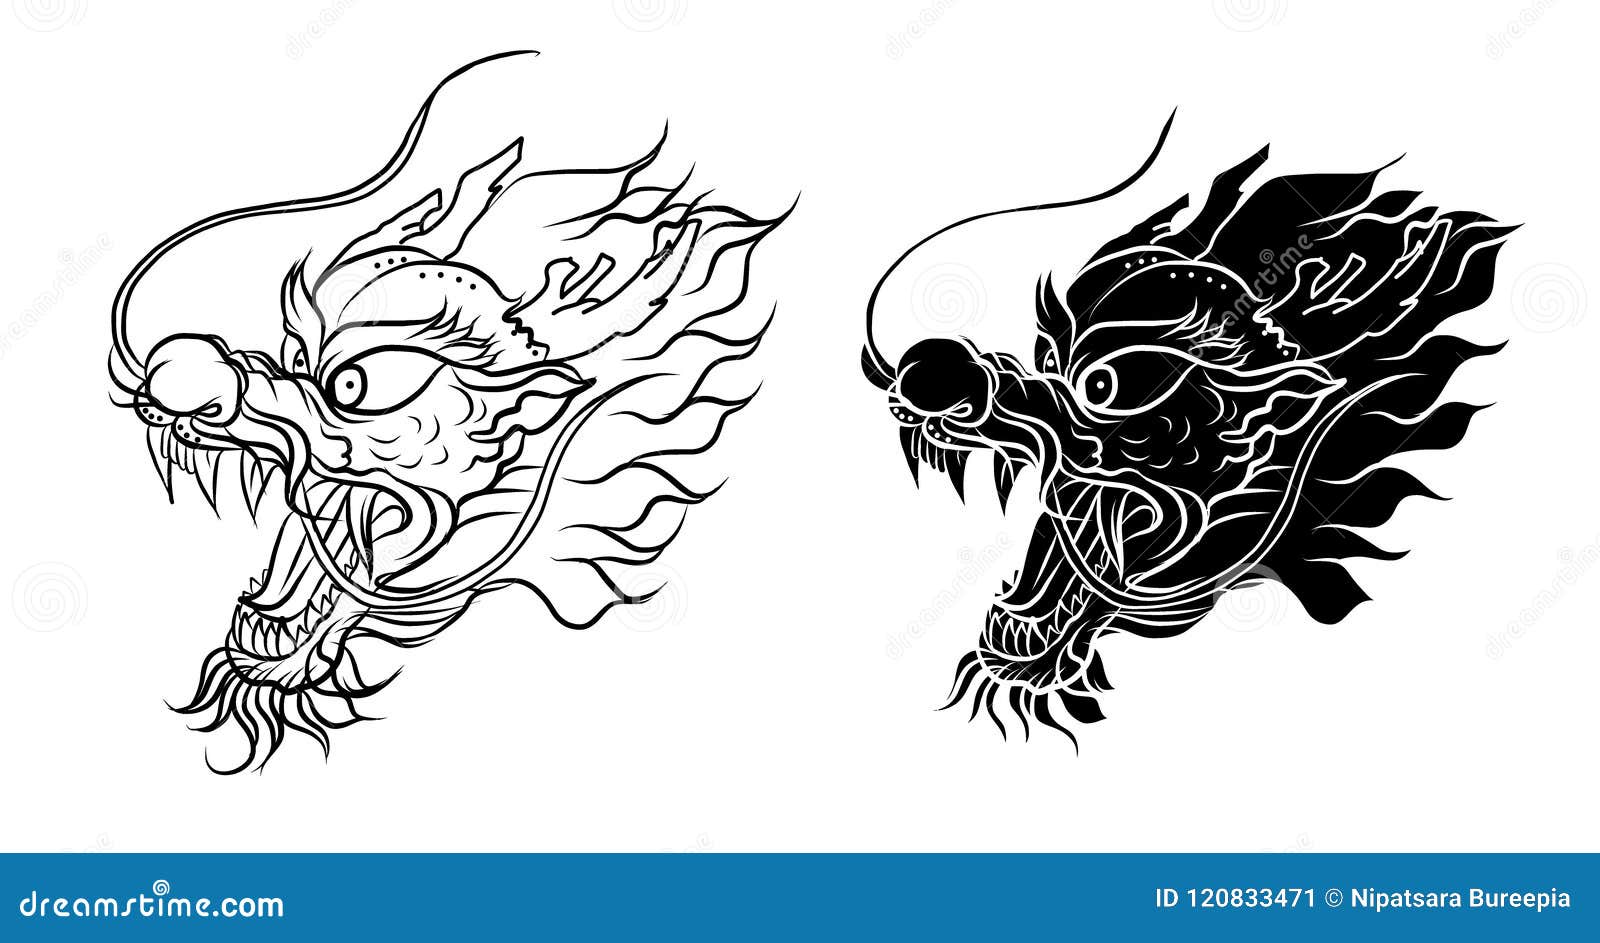 Top 67 Best Dragon Head Tattoo Ideas  2021 Inspiration Guide